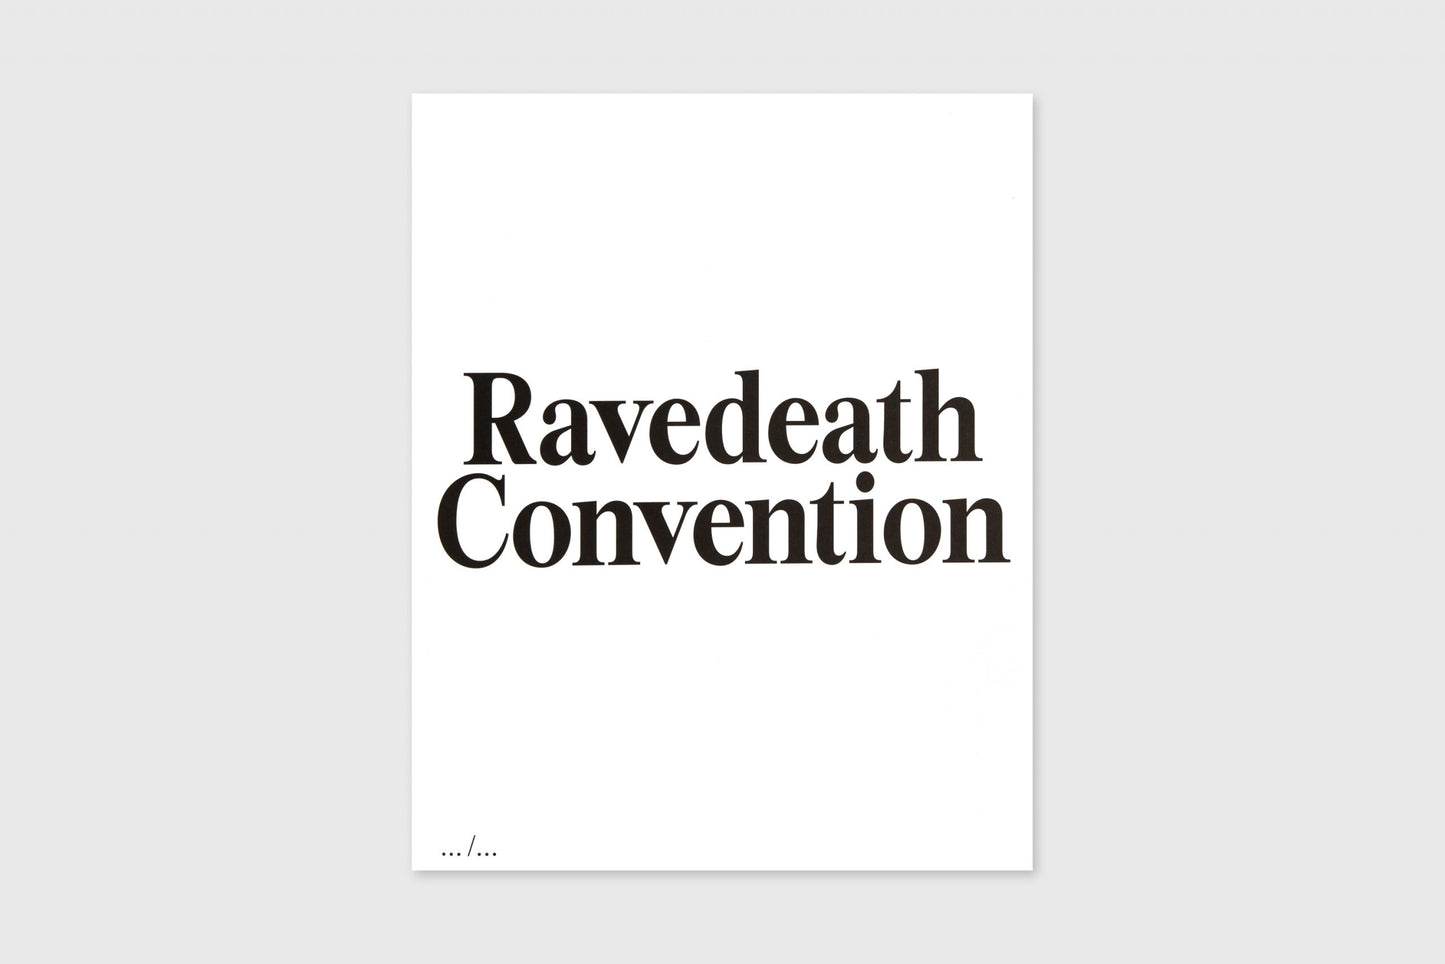 Ravedeath Convention